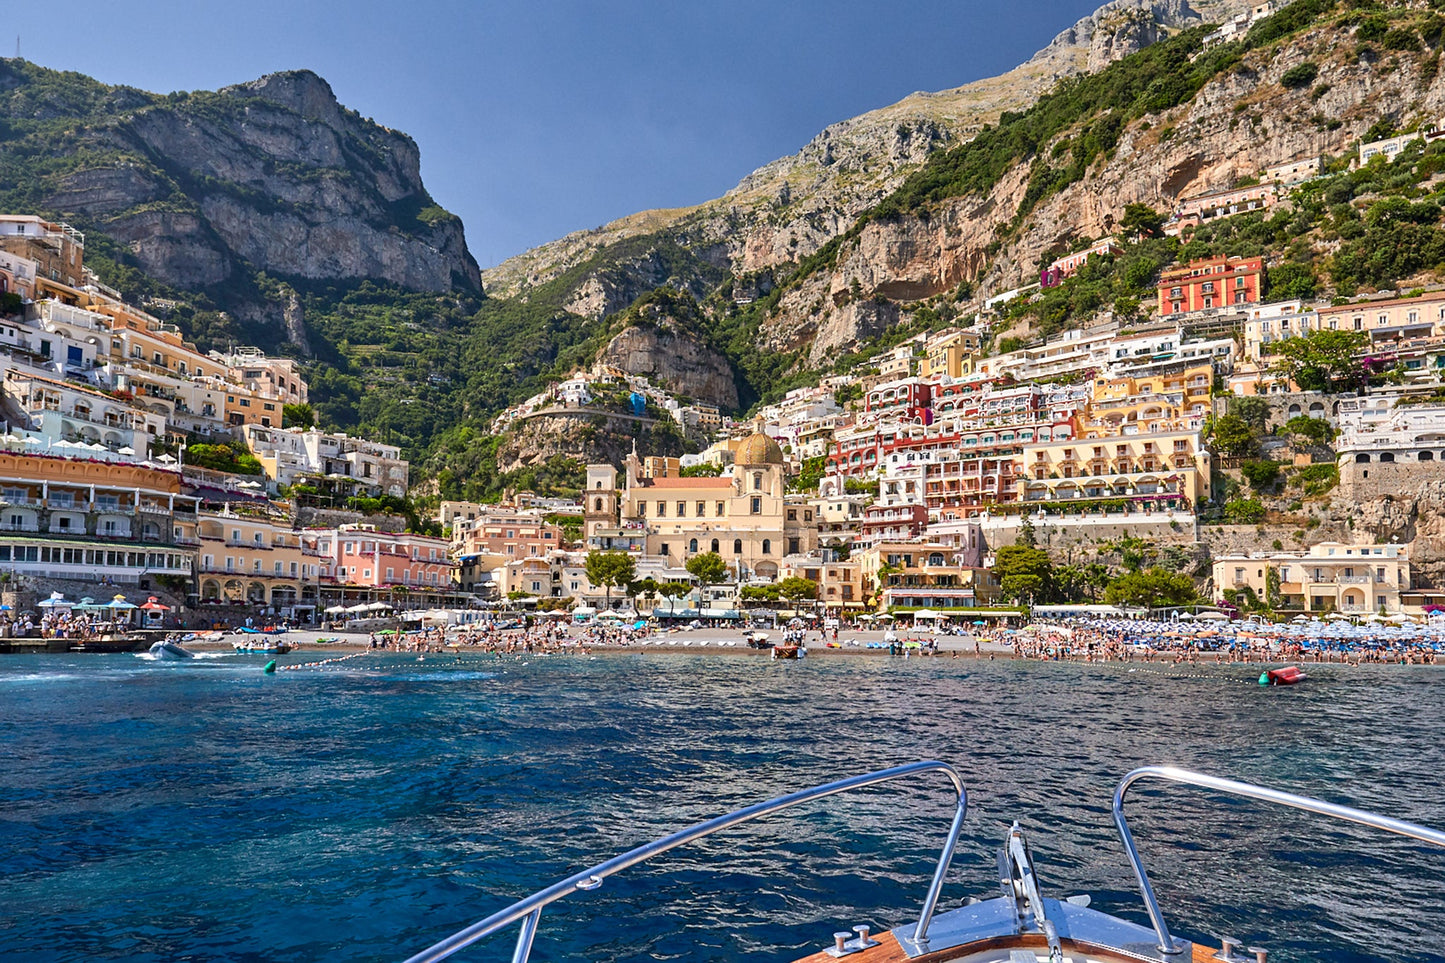 Arrival - Positano, Amalfi Coast Italy